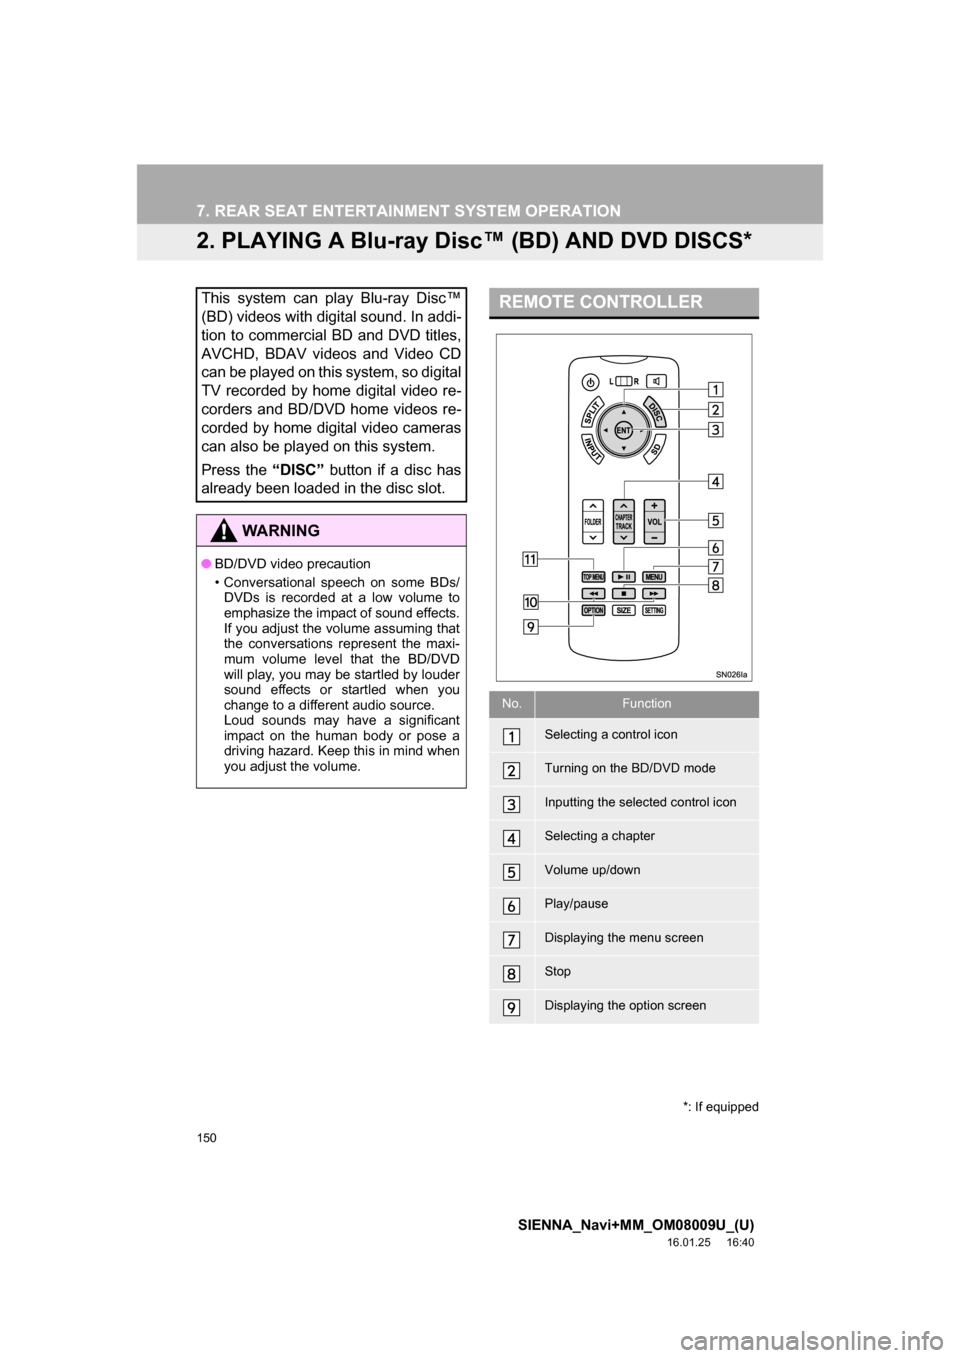 TOYOTA SIENNA 2017 XL30 / 3.G Navigation Manual 150
7. REAR SEAT ENTERTAINMENT SYSTEM OPERATION
SIENNA_Navi+MM_OM08009U_(U)
16.01.25     16:40
2. PLAYING A Blu-ray Disc™ (BD) AND DVD DISCS*
This system can play Blu-ray Disc™
(BD) videos with di